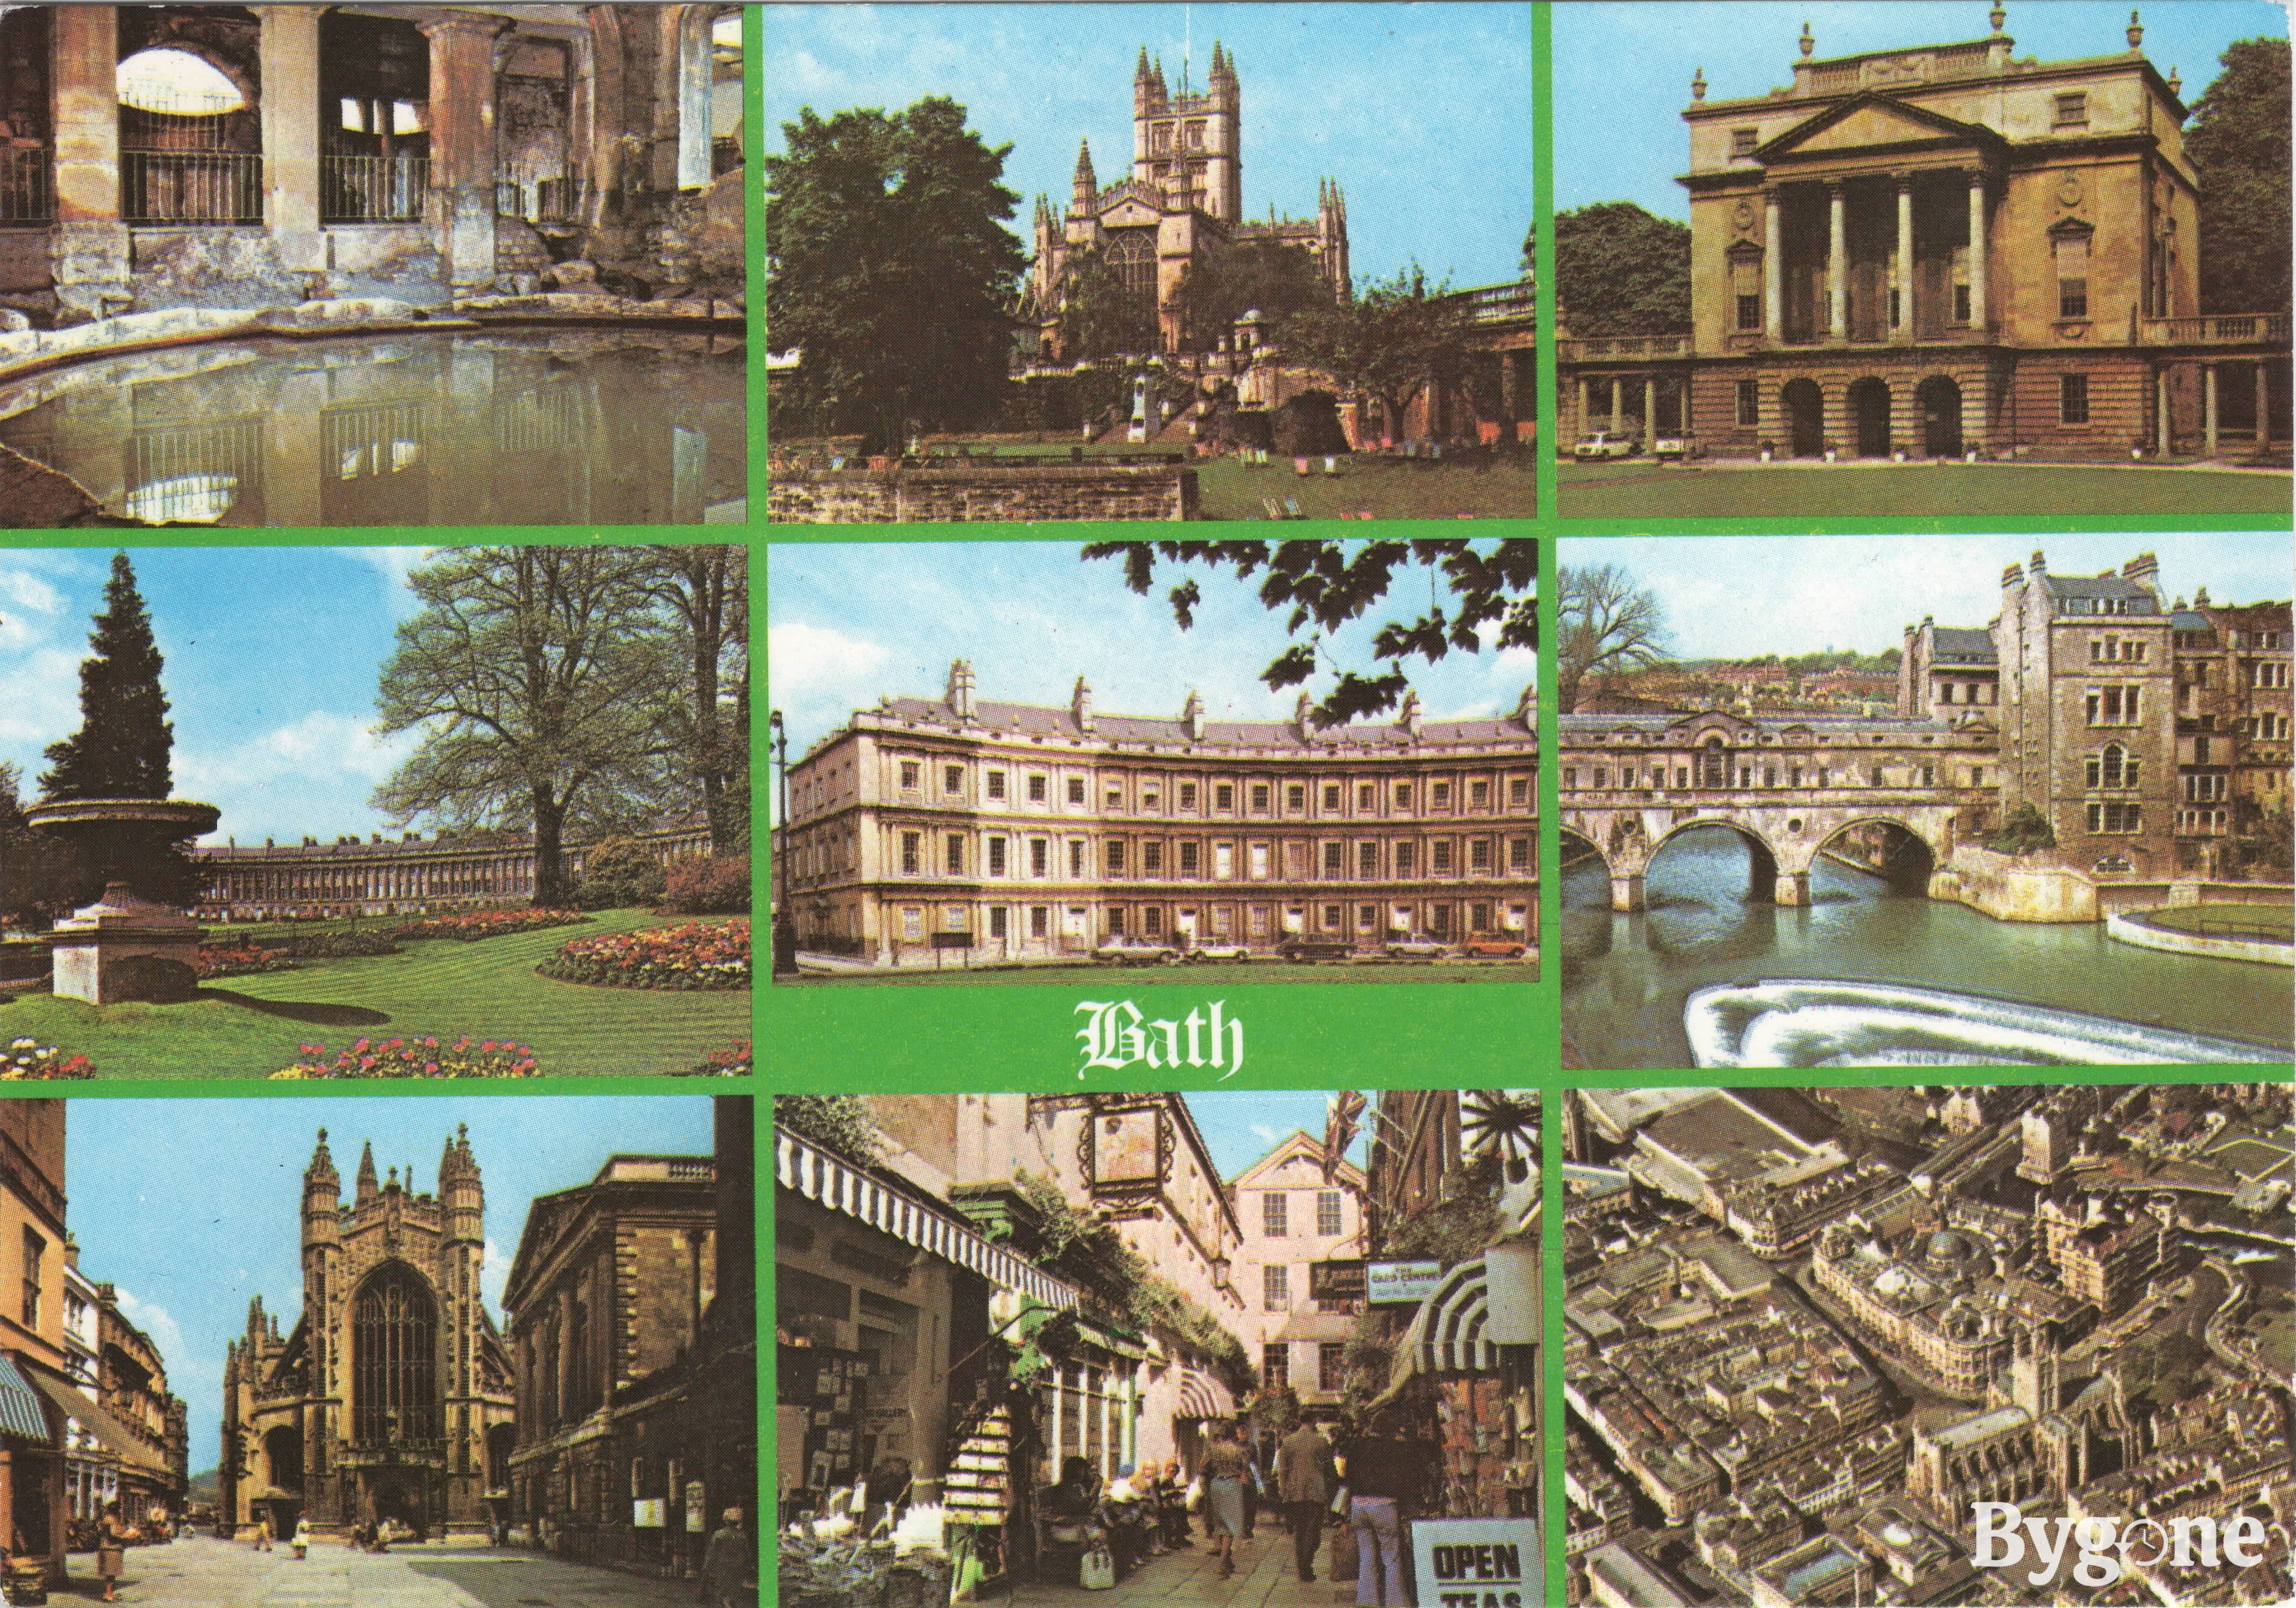 Bath, Somerset. Circa 1970s